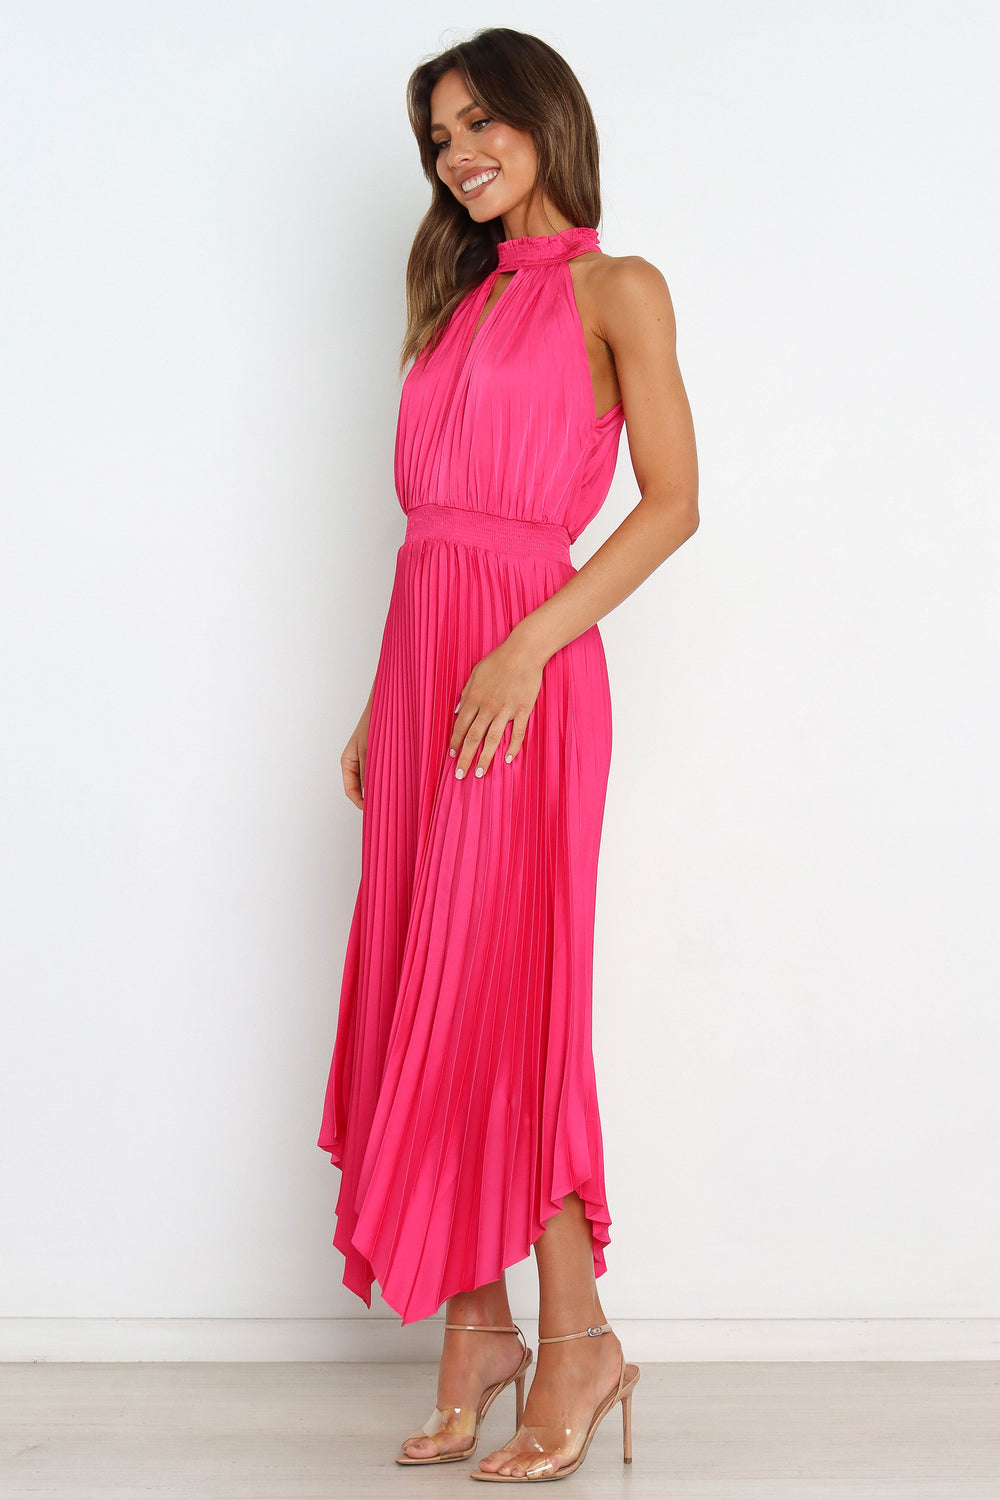 Shop Formal Dress - Dominique Dress - Pink fourth image